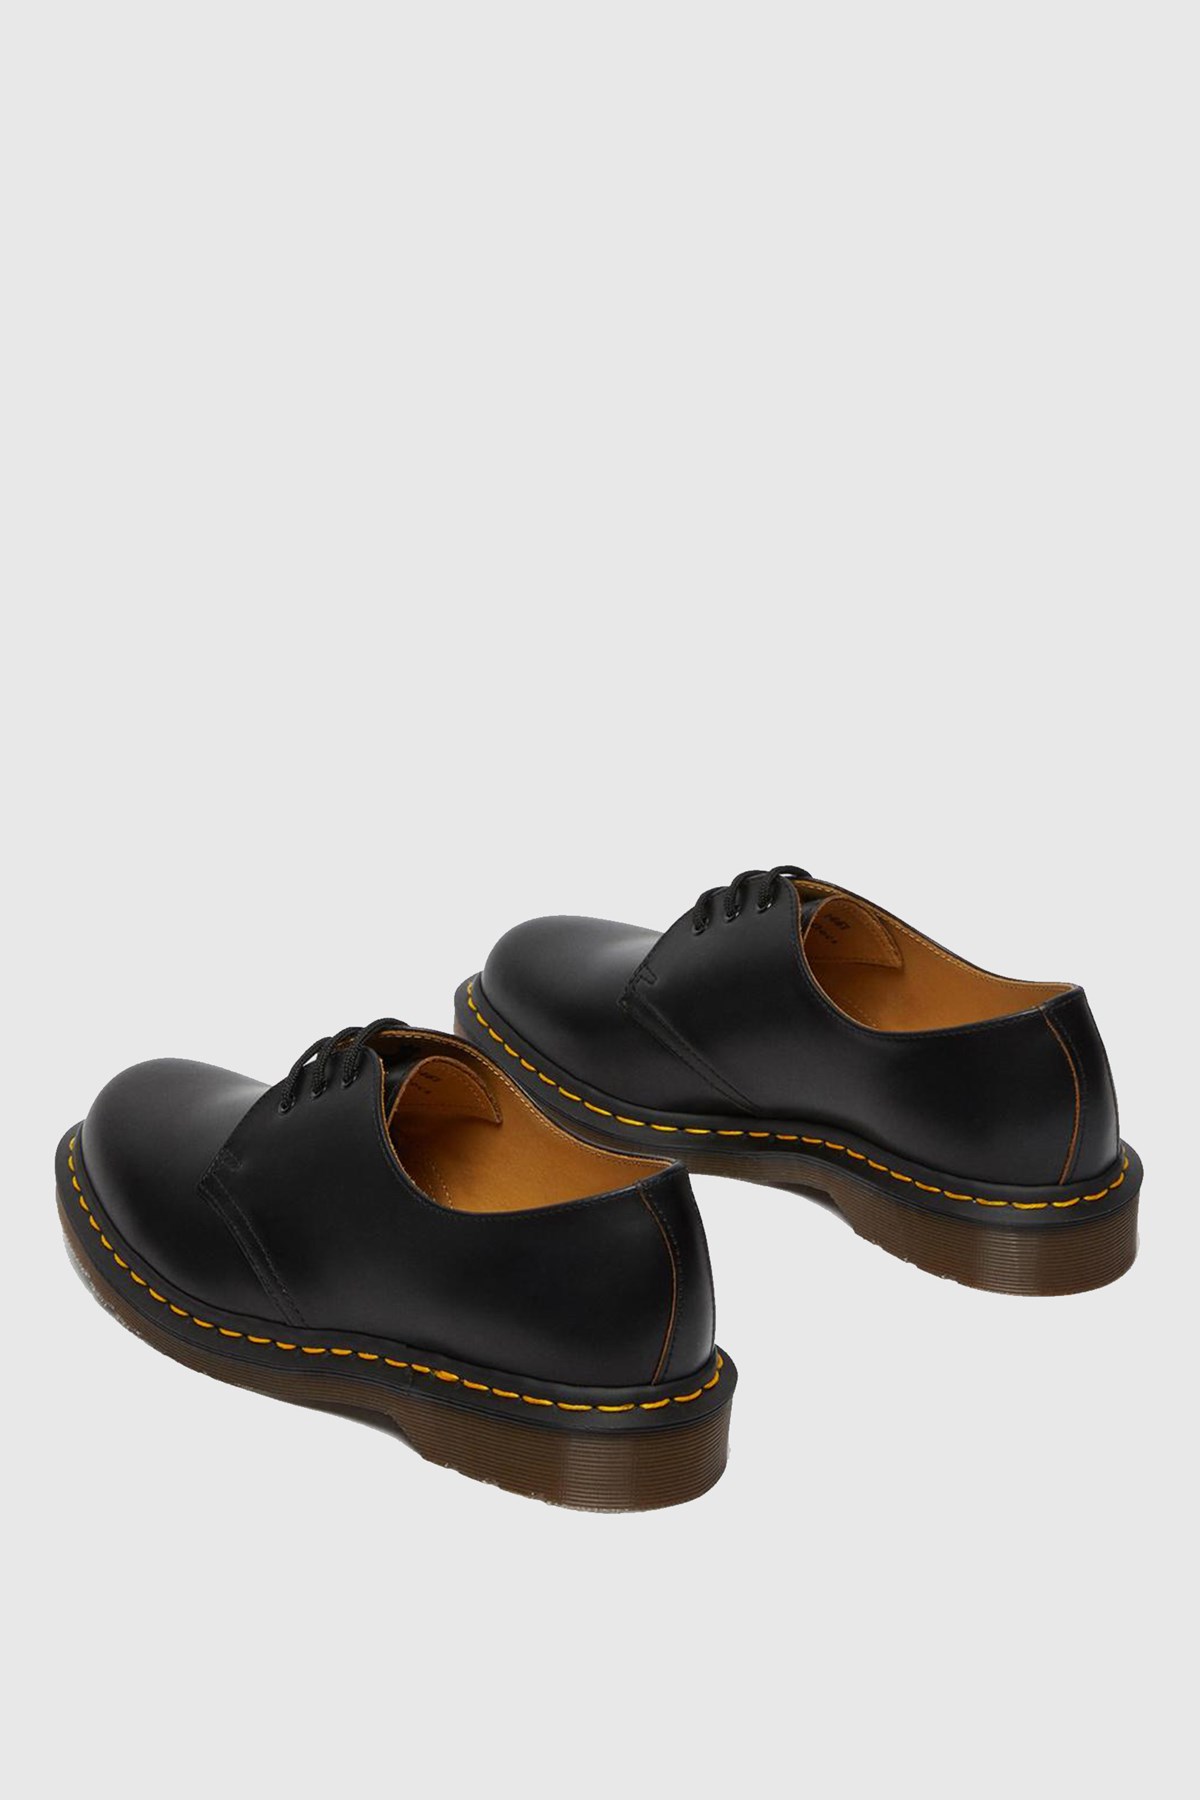 Dr Martens Vintage 1461 Shoe – La Garçonne